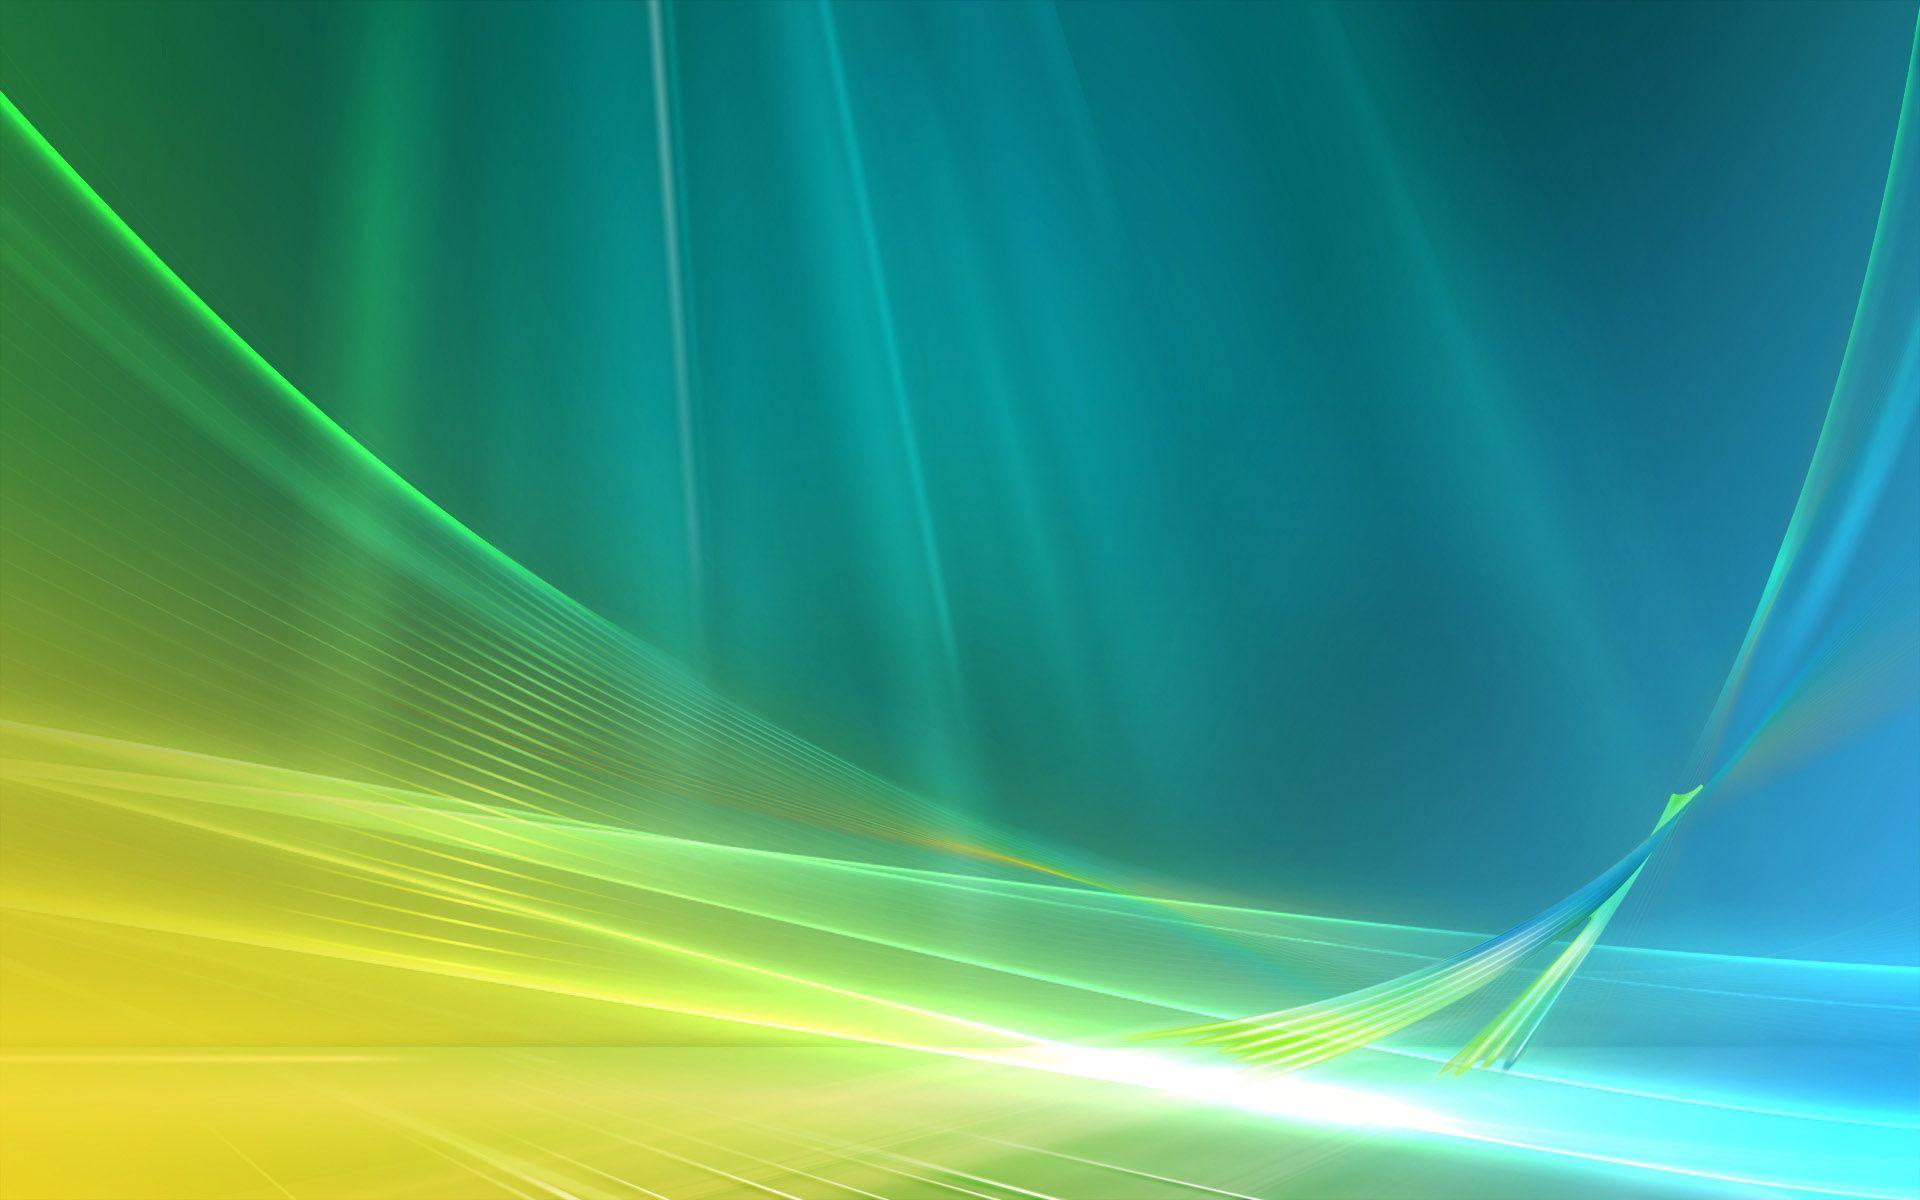 Microsoft Windows Vista free desktop background wallpaper image